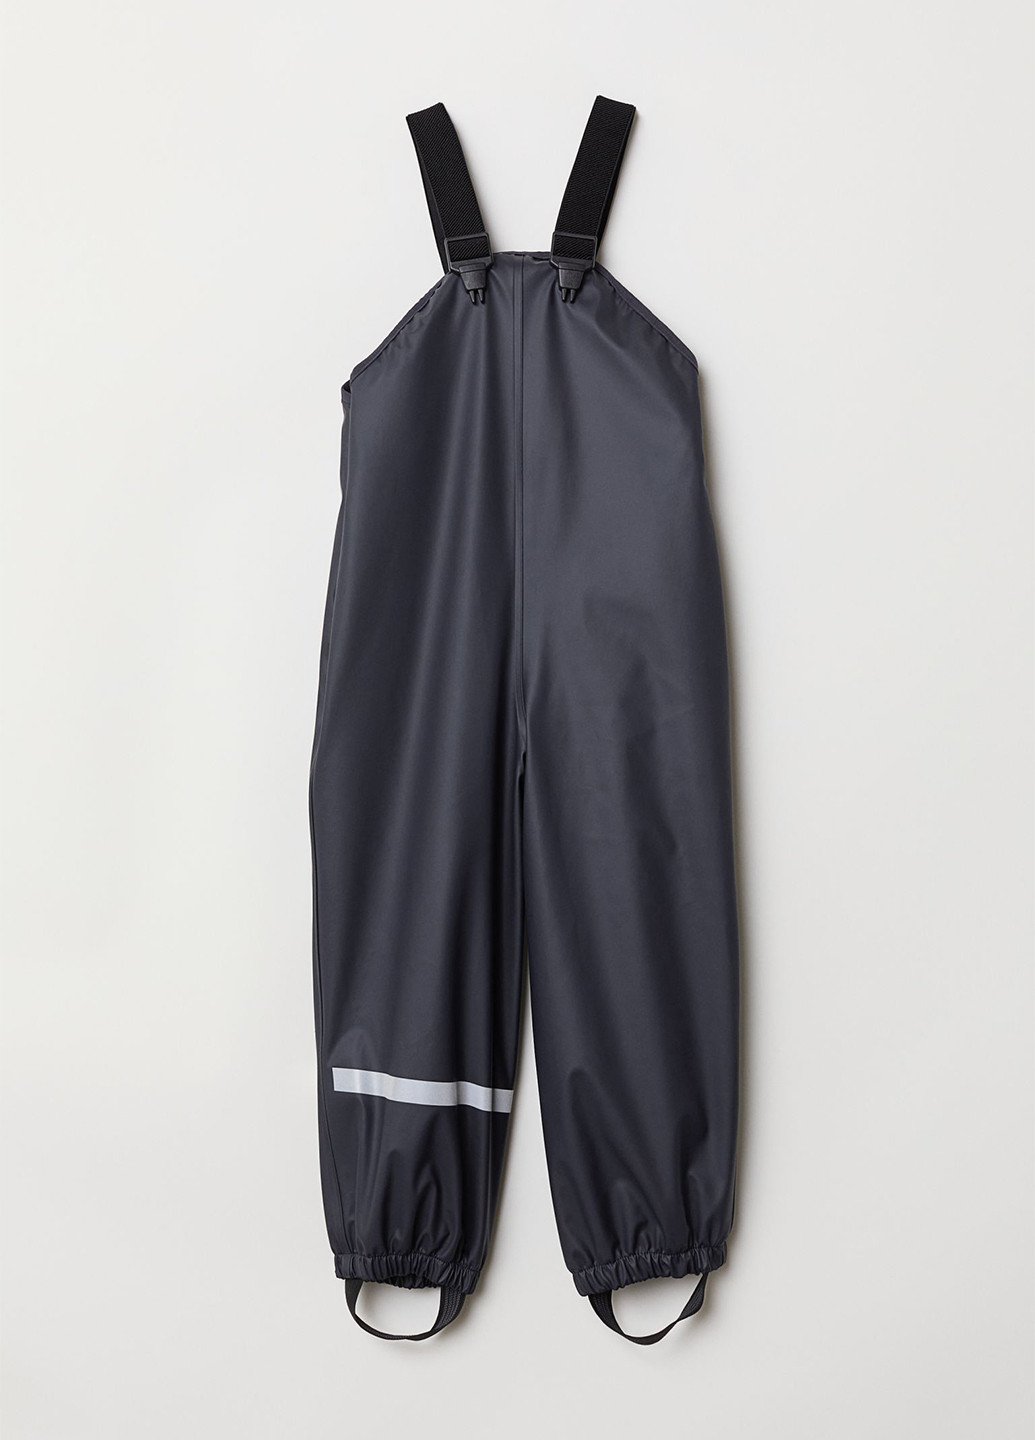 Комбинезон H&M комбинезон-брюки однотонный тёмно-синий спортивный полиэстер